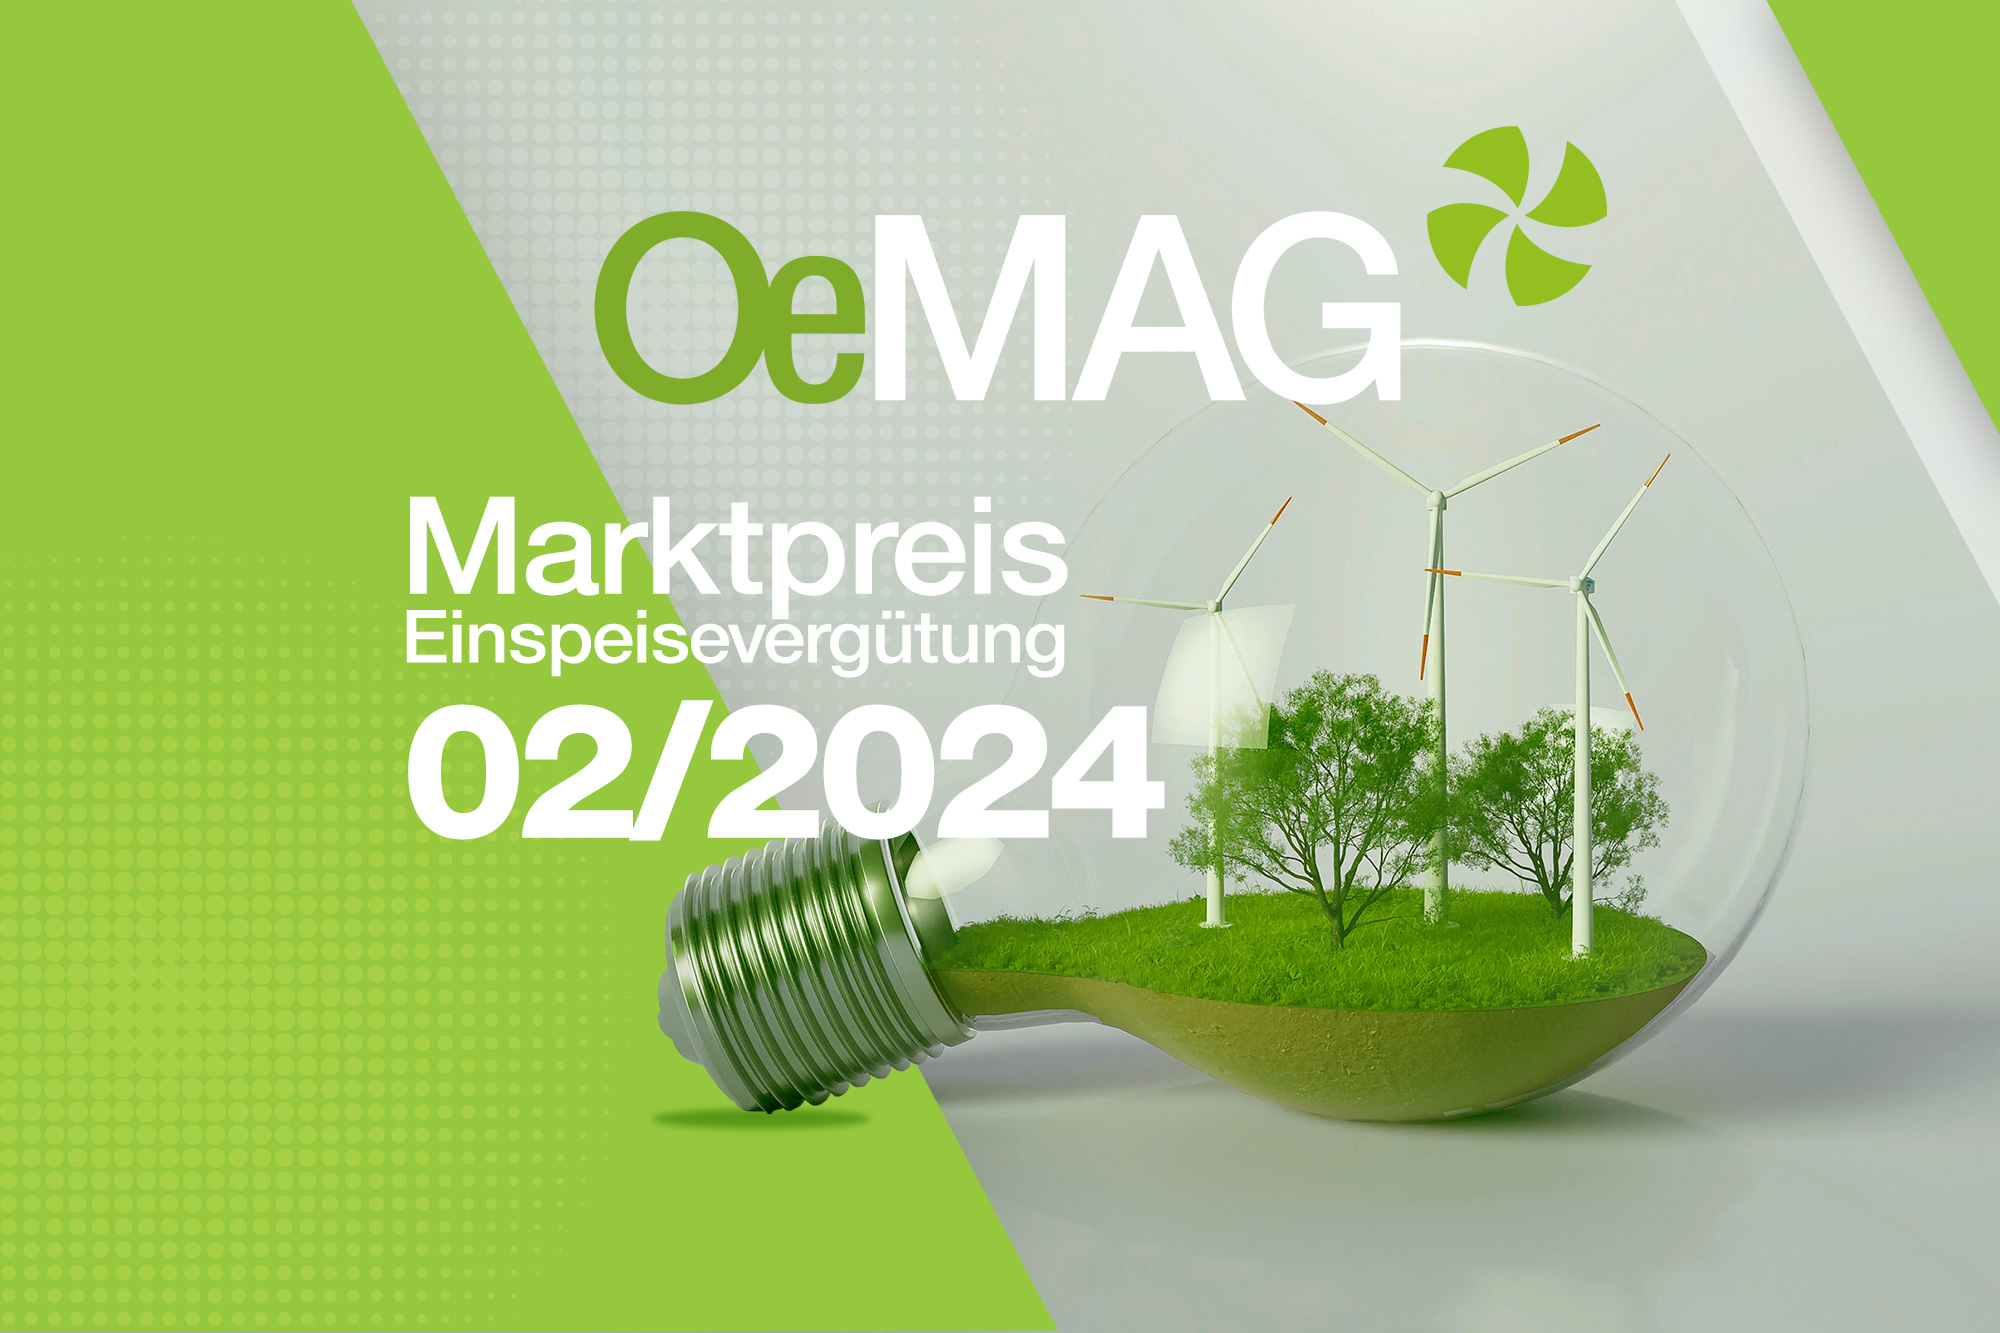 OeMAG Marktpreis 02/2024 Einspeisevergütung